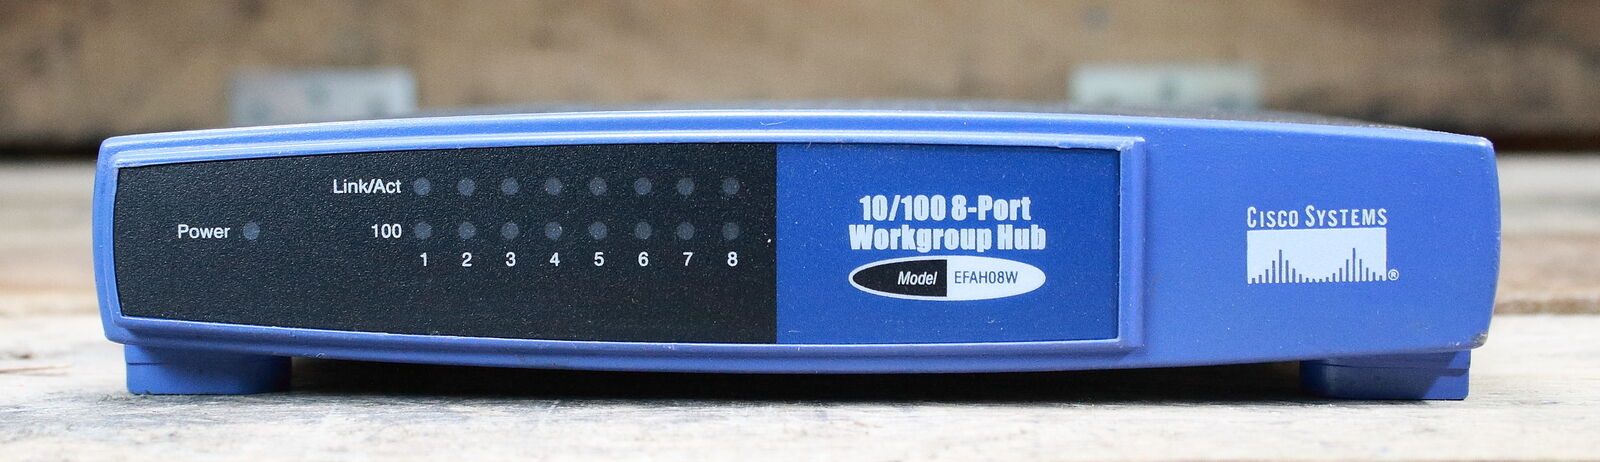 Linksys: 8 Port 10/100 Workgroup Hub - Model EFAH08W | NO POWER CORD Y